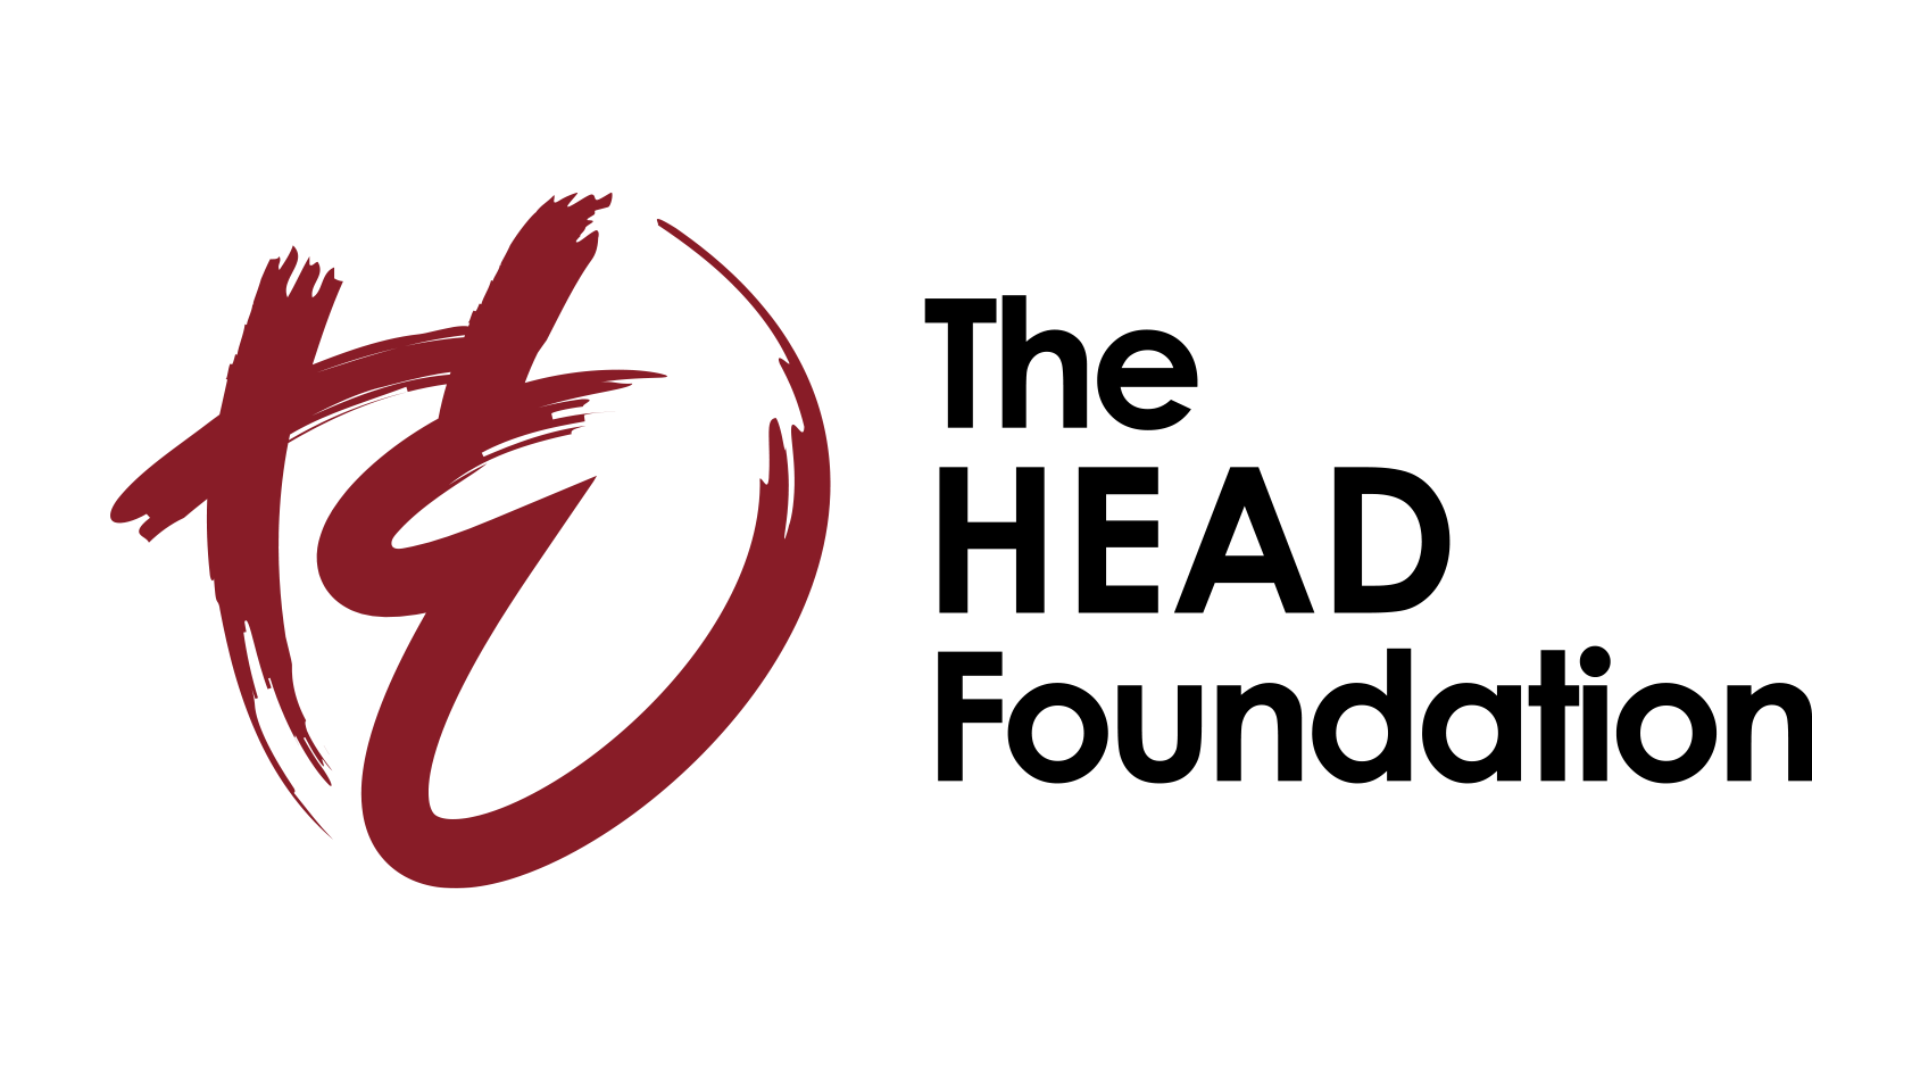 The HEAD Foundation